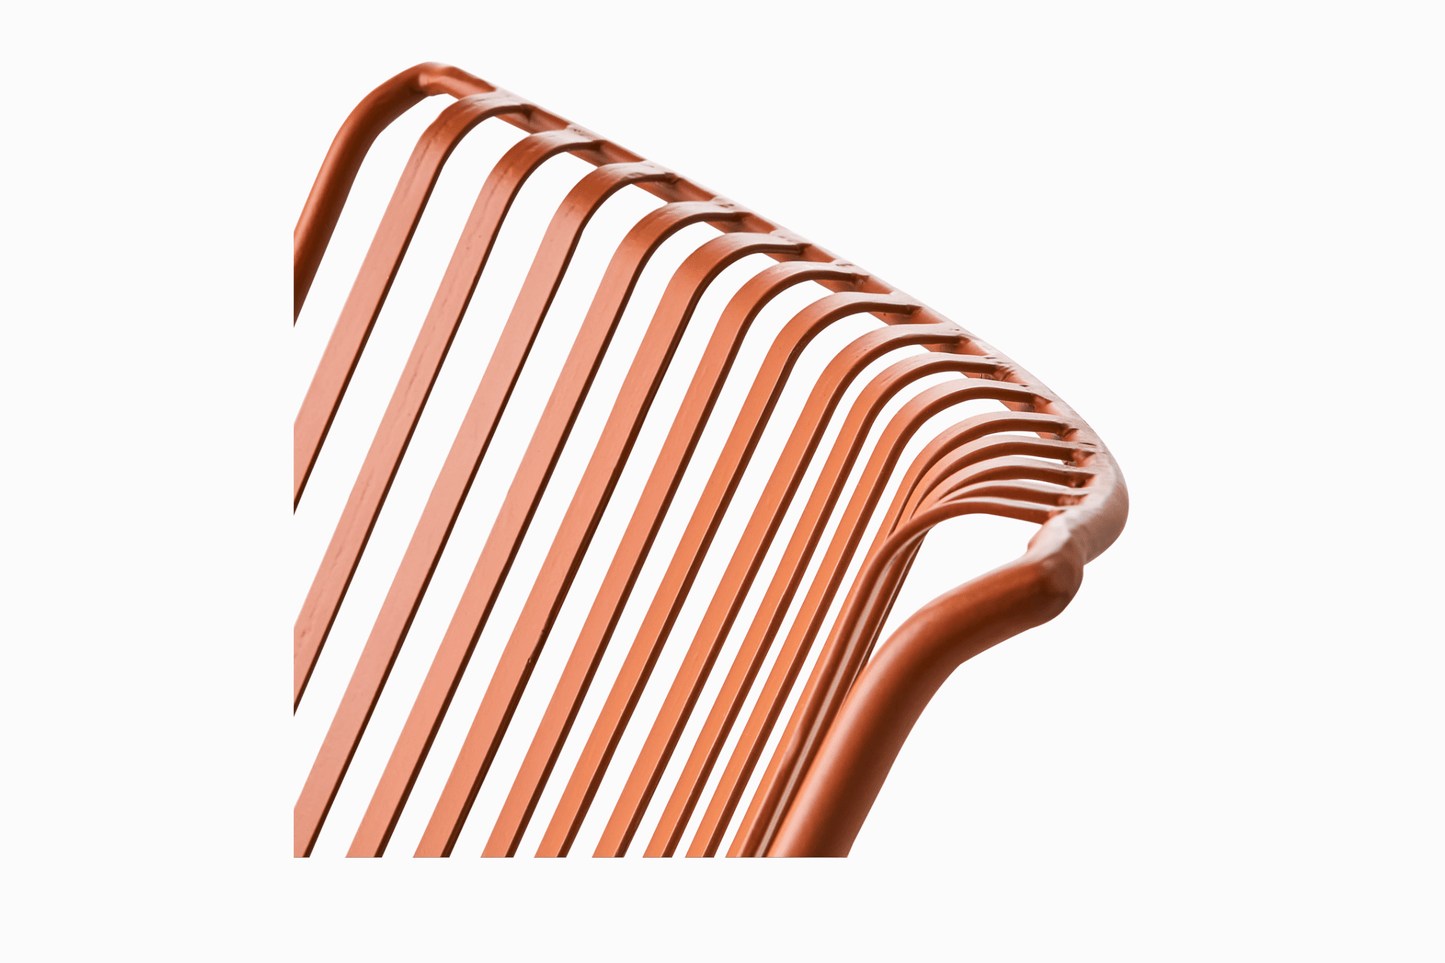 Amalfi Metal Armchair - Terracotta